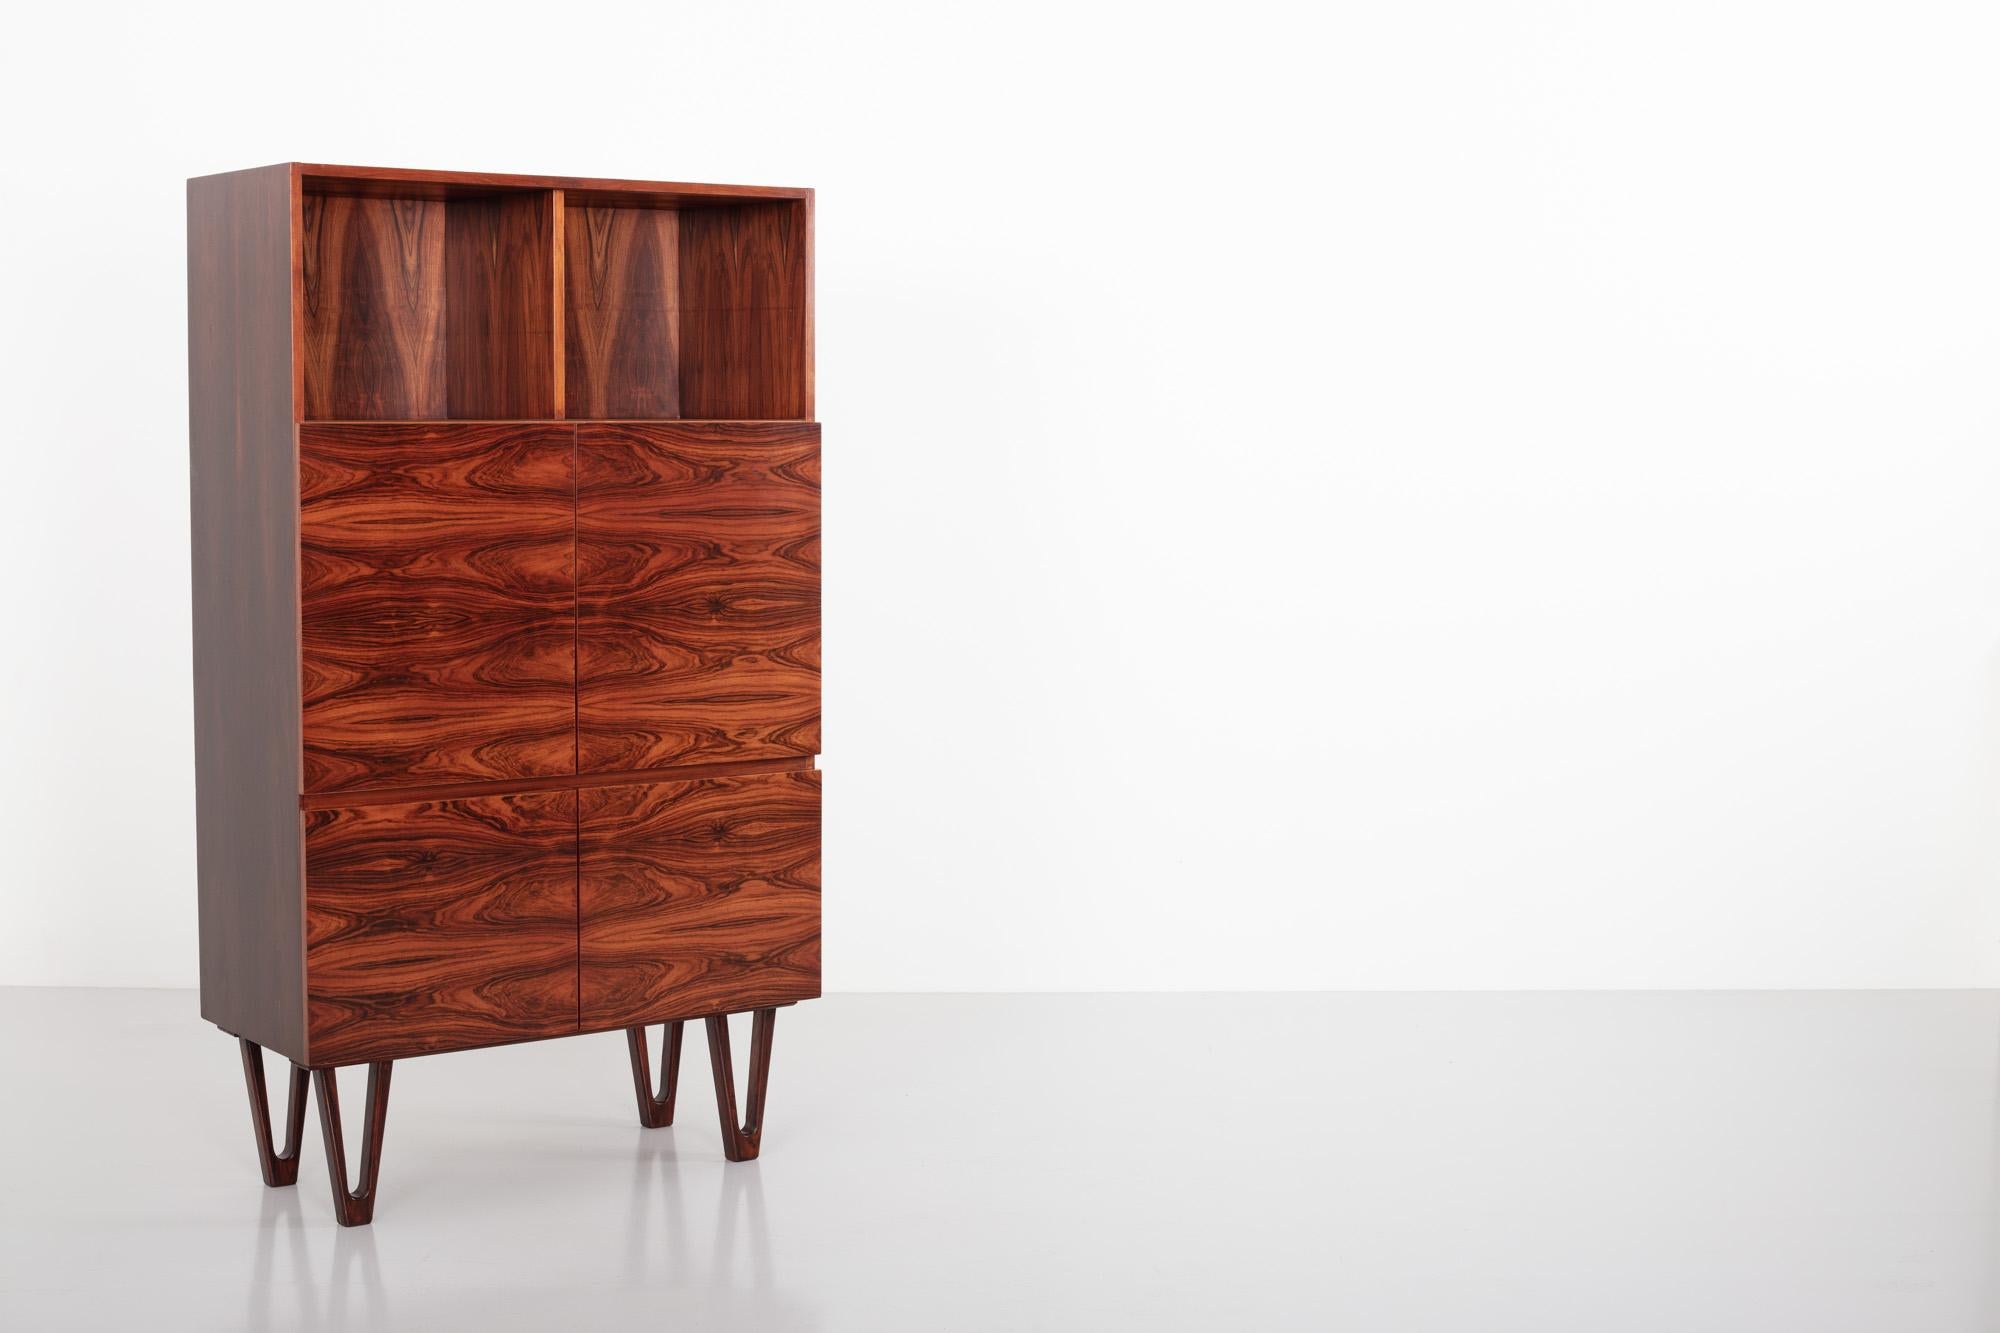 Rosewood Trol Cabinet by Ib Kofod-Larsen for Seffle Möbelfabrik, Sweden, 1950s For Sale 4